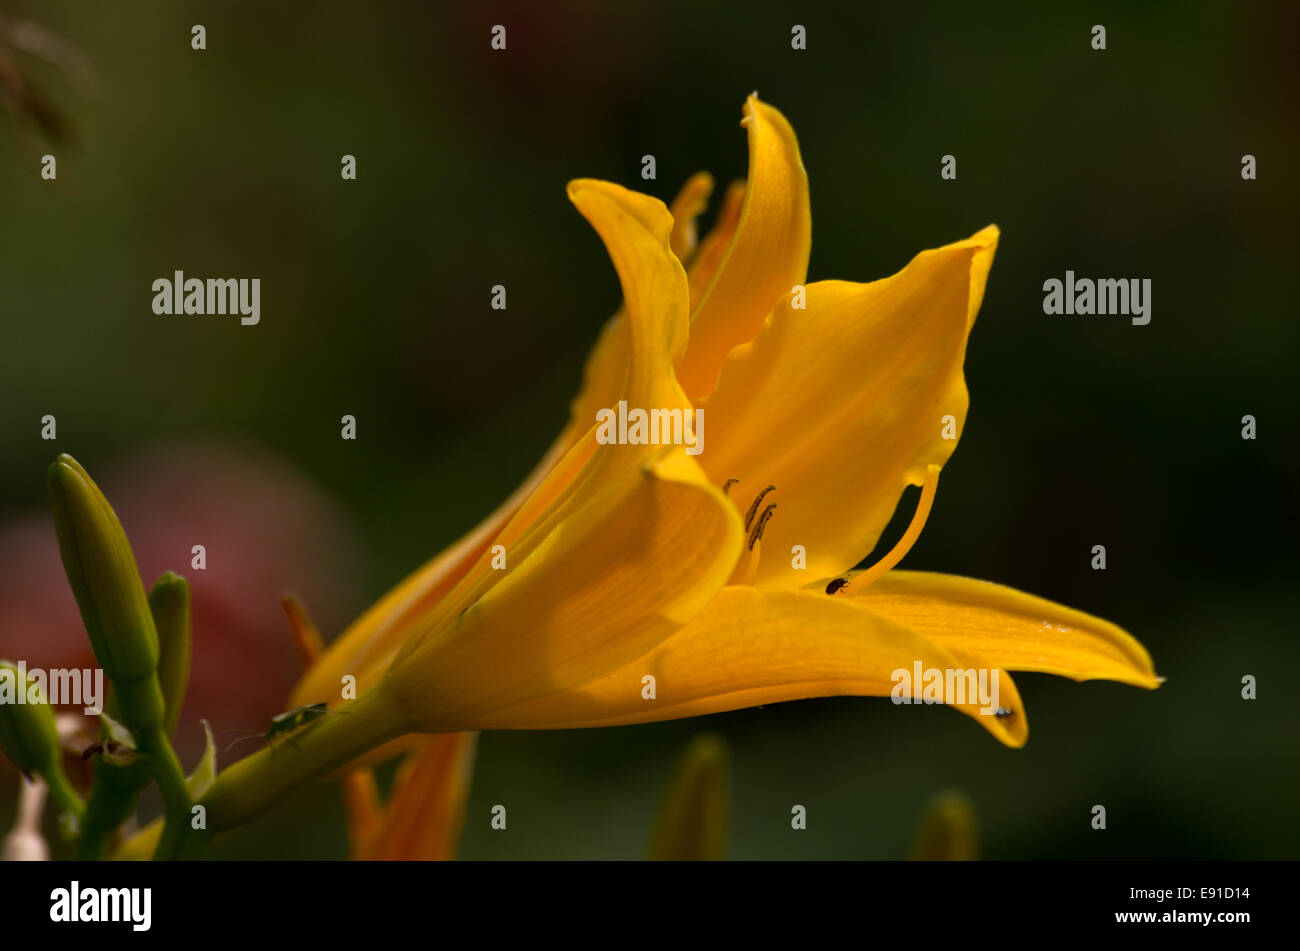 Yellow day lily hemerocallis Stock Photo